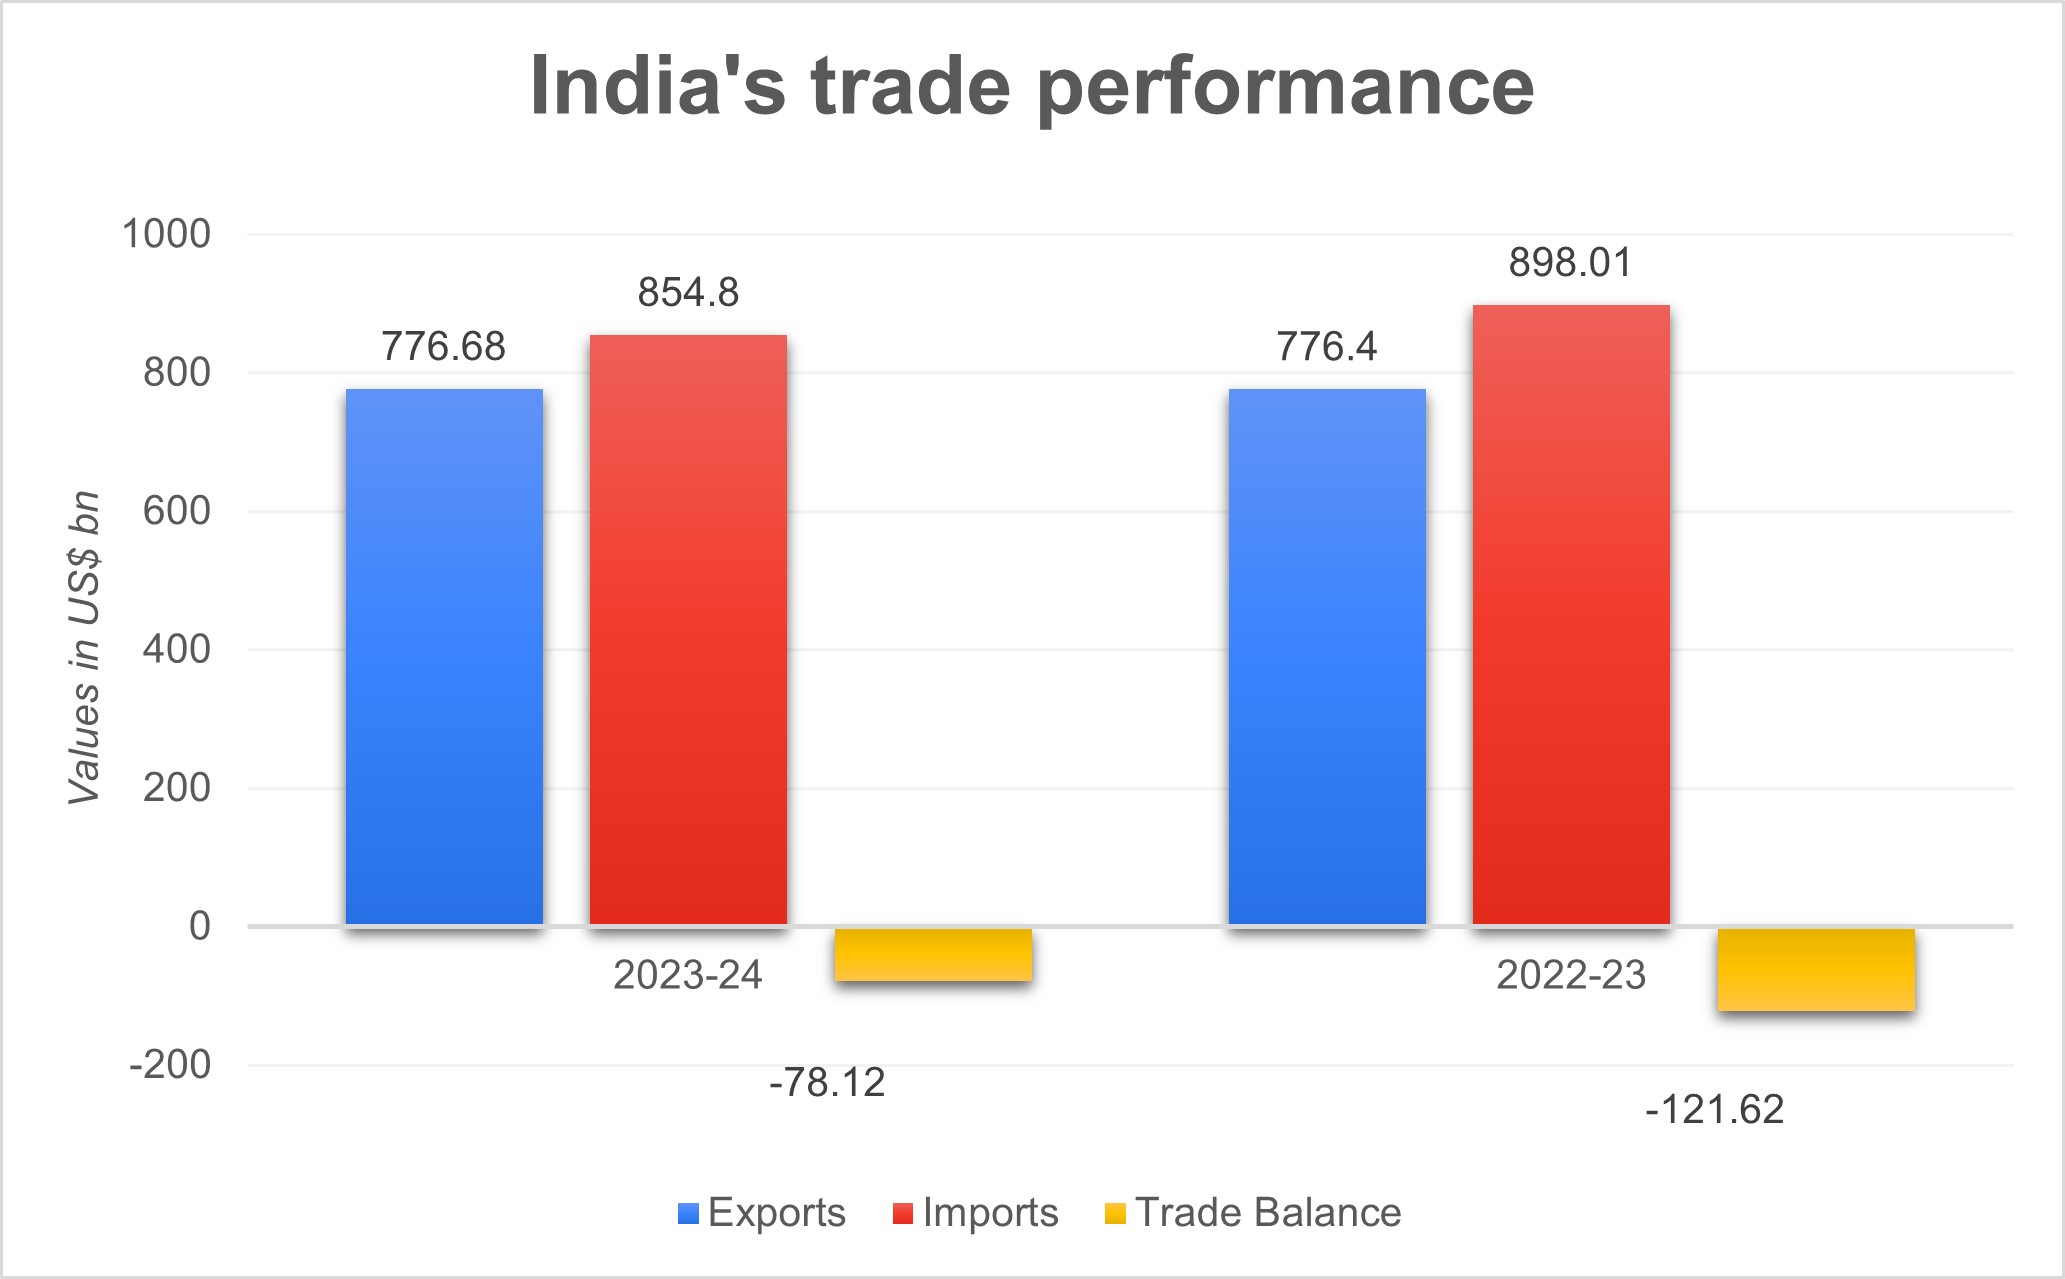 India's trade performance 2023-24